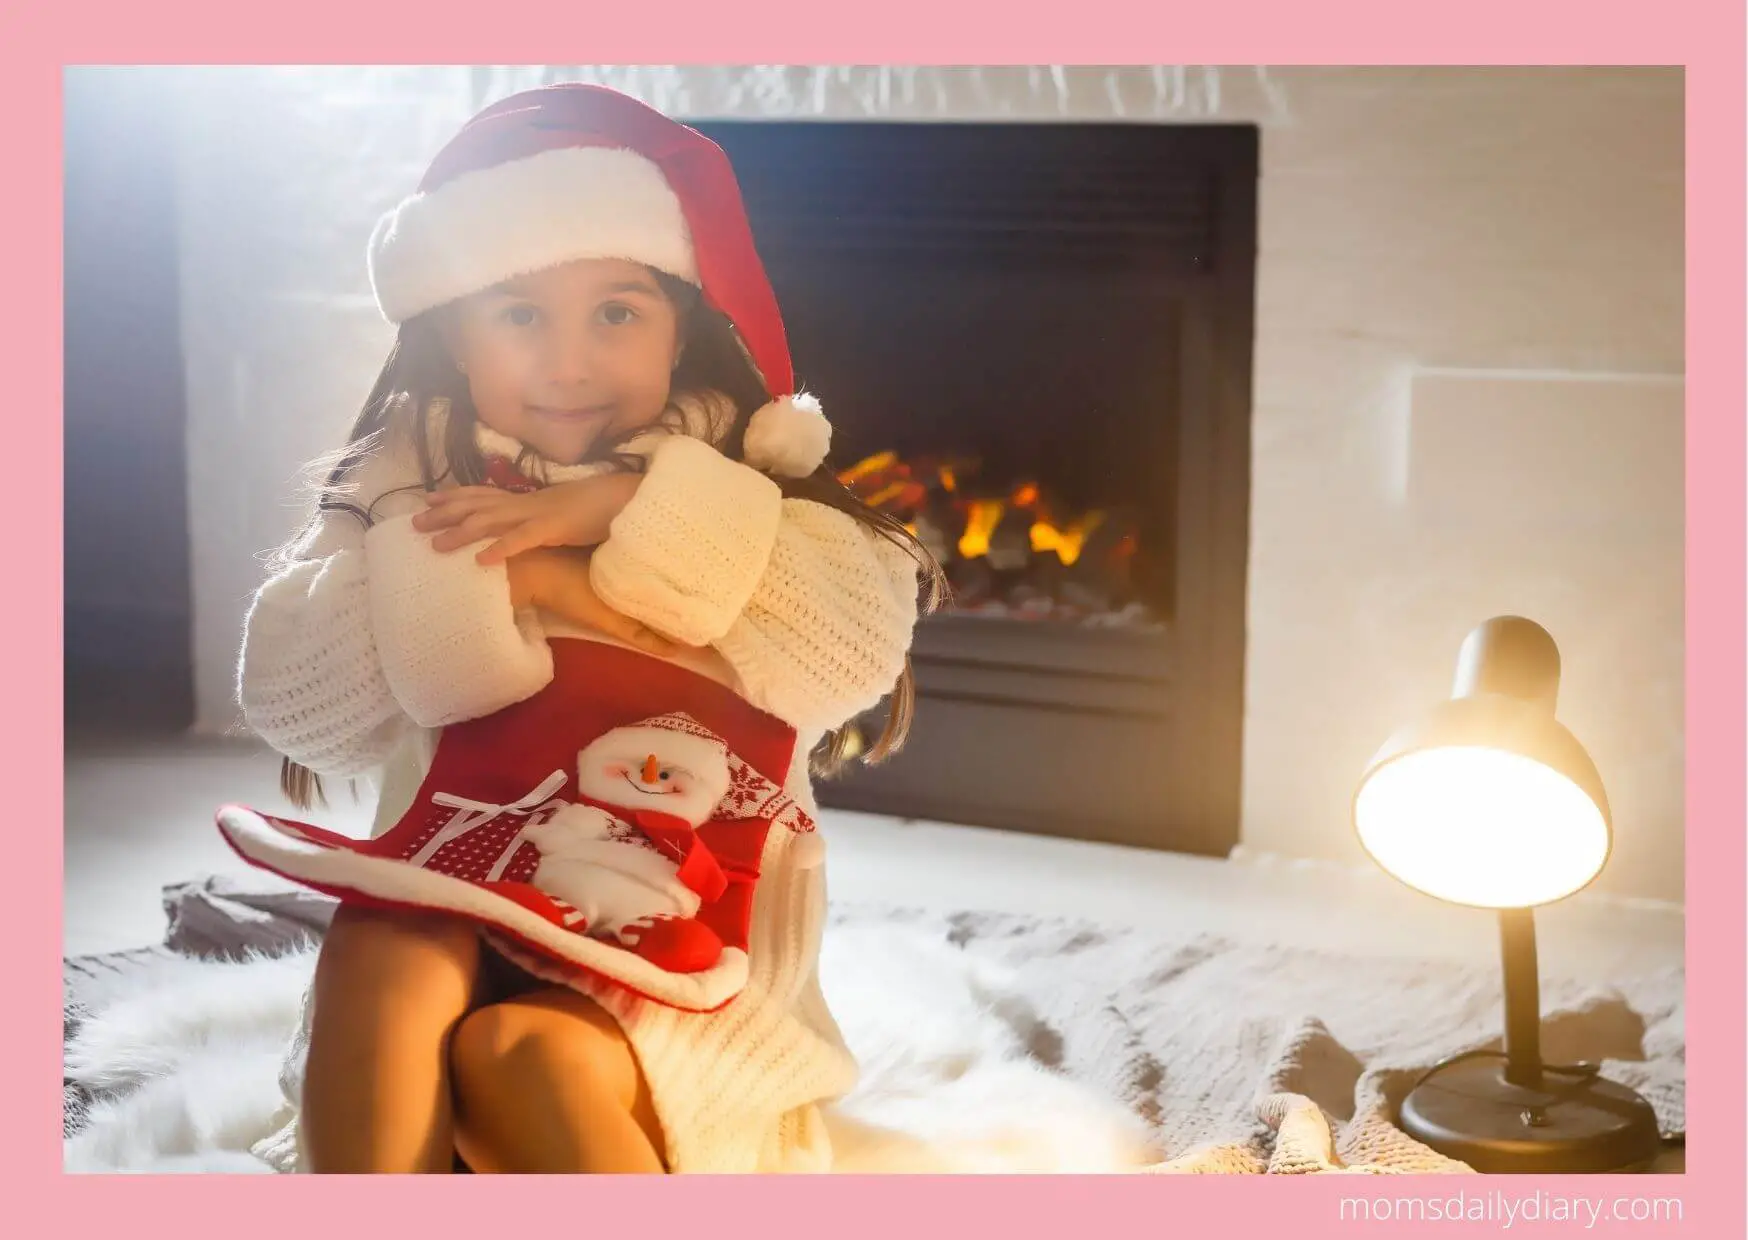 Toddler holding her Christmas stocking.